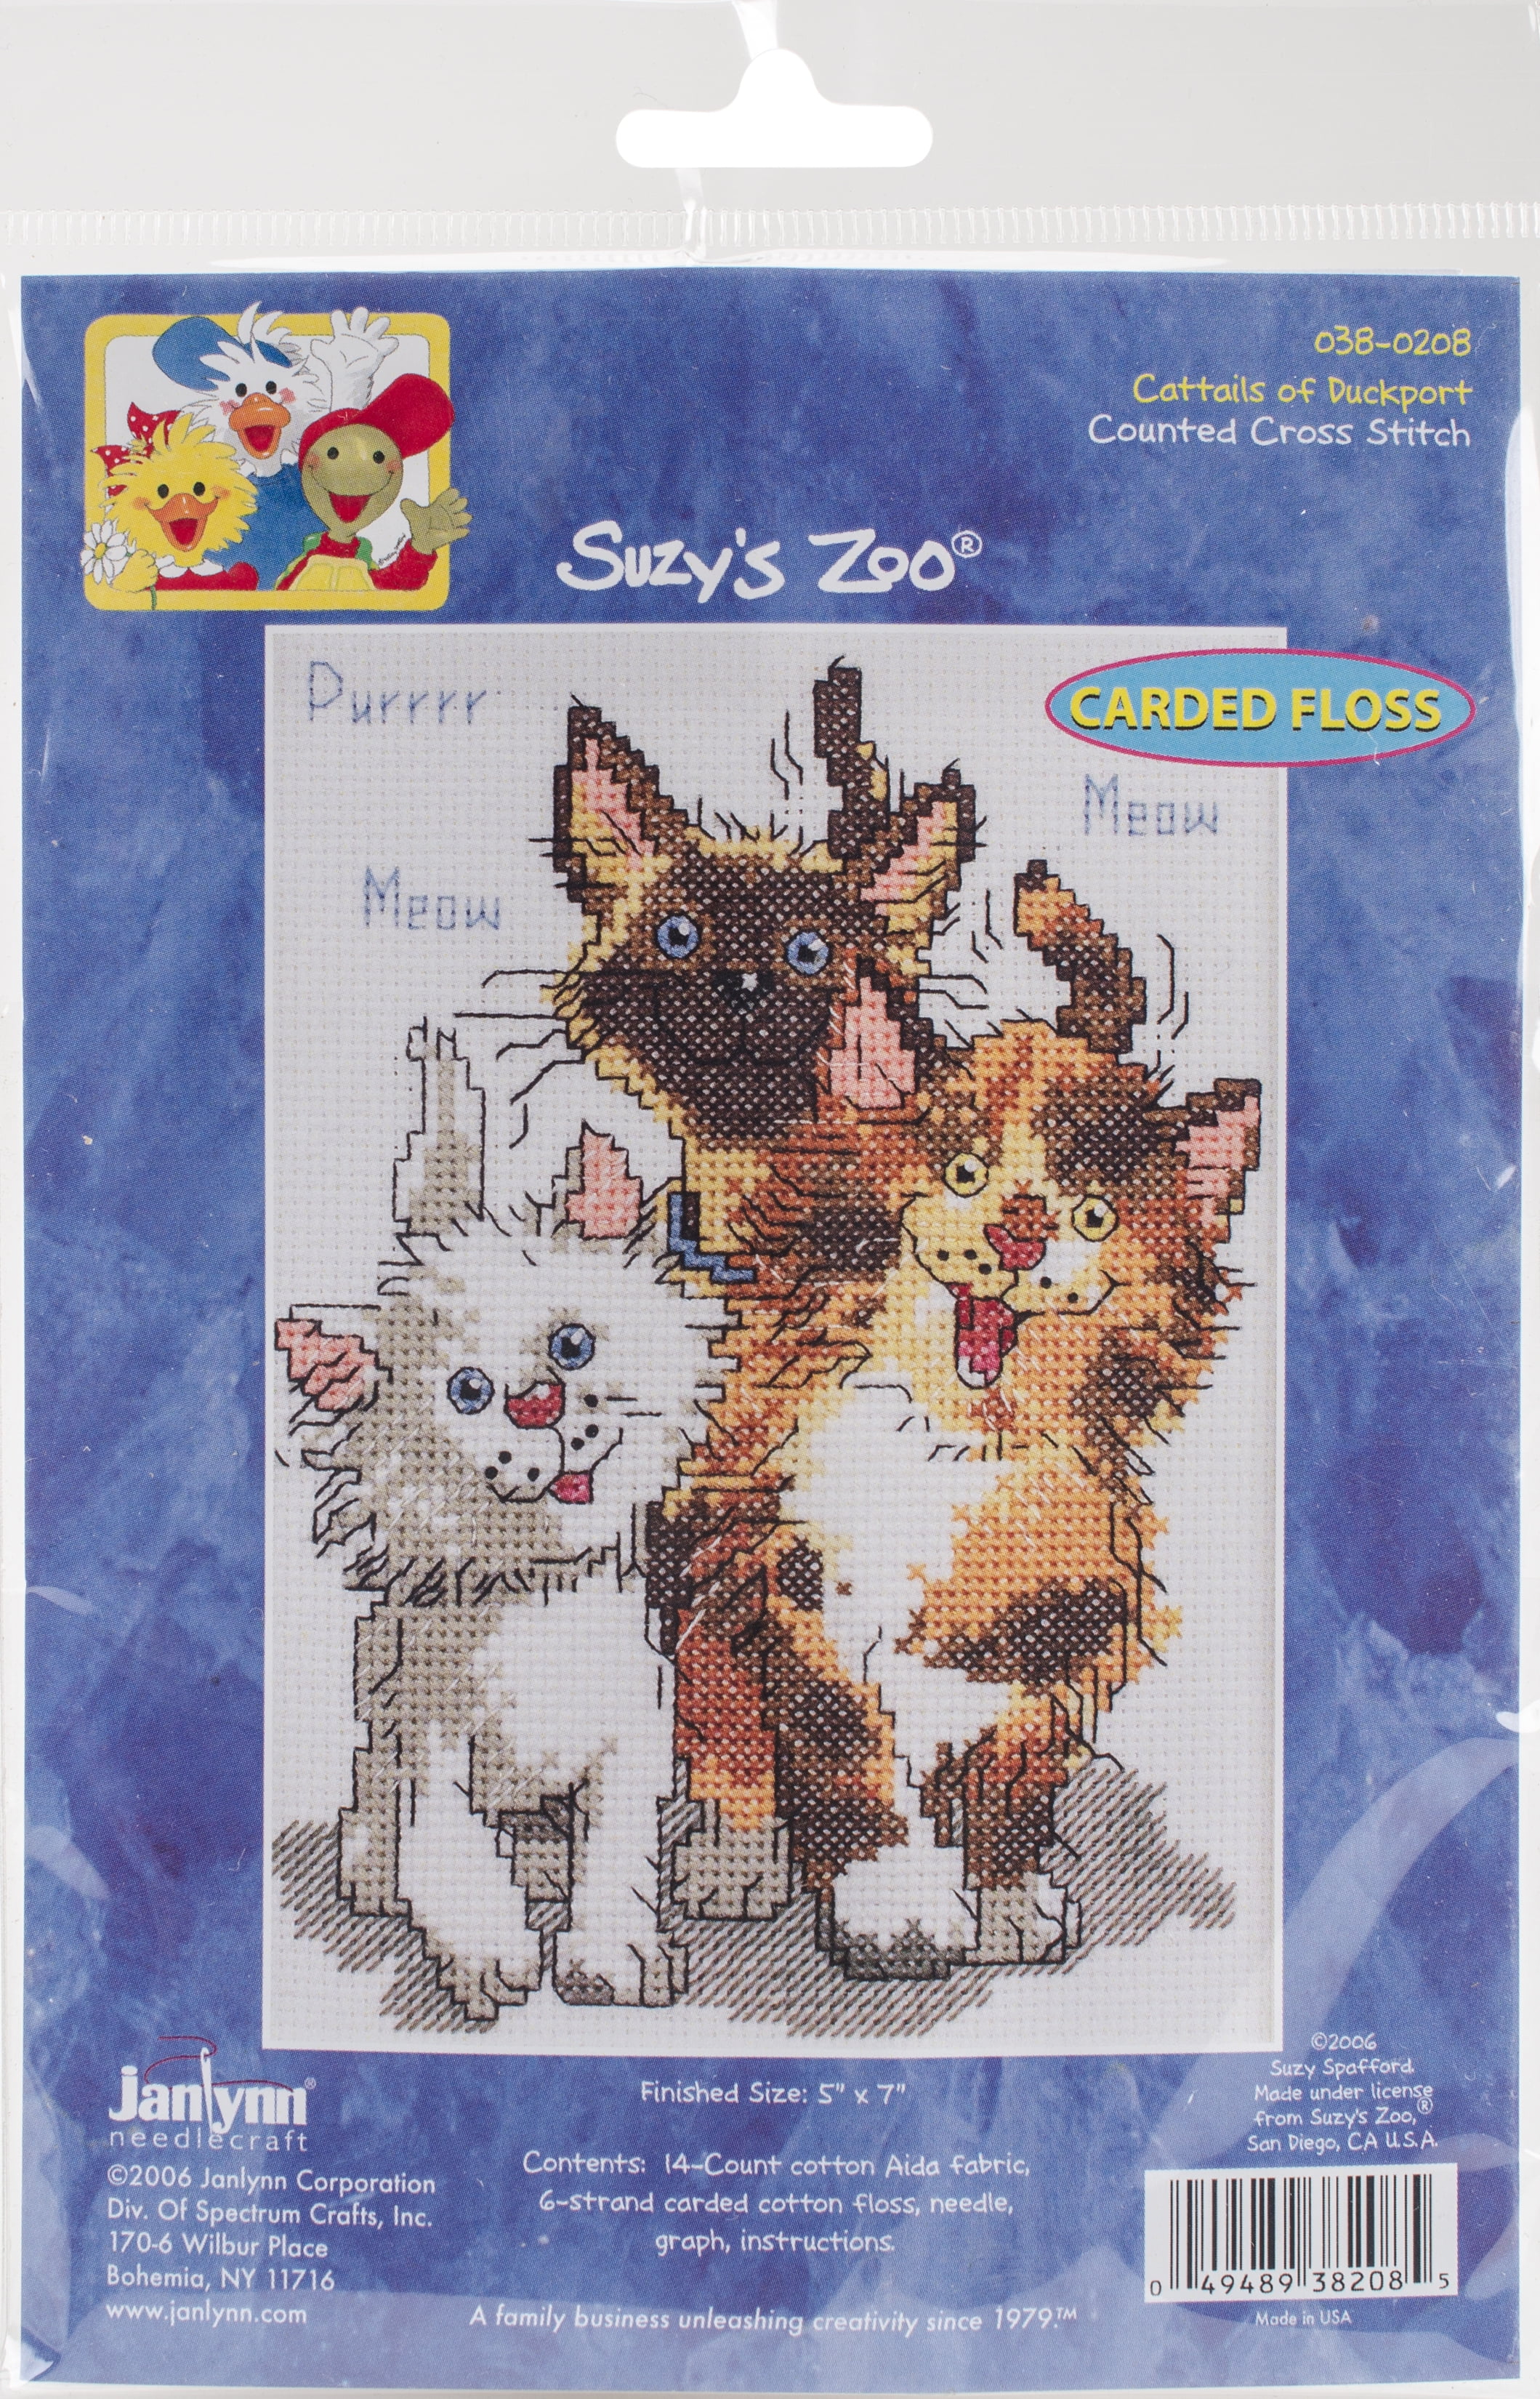 Janlynn/Suzy's Zoo Mini Counted Cross Stitch Kit 7 X5 -Dogs Of